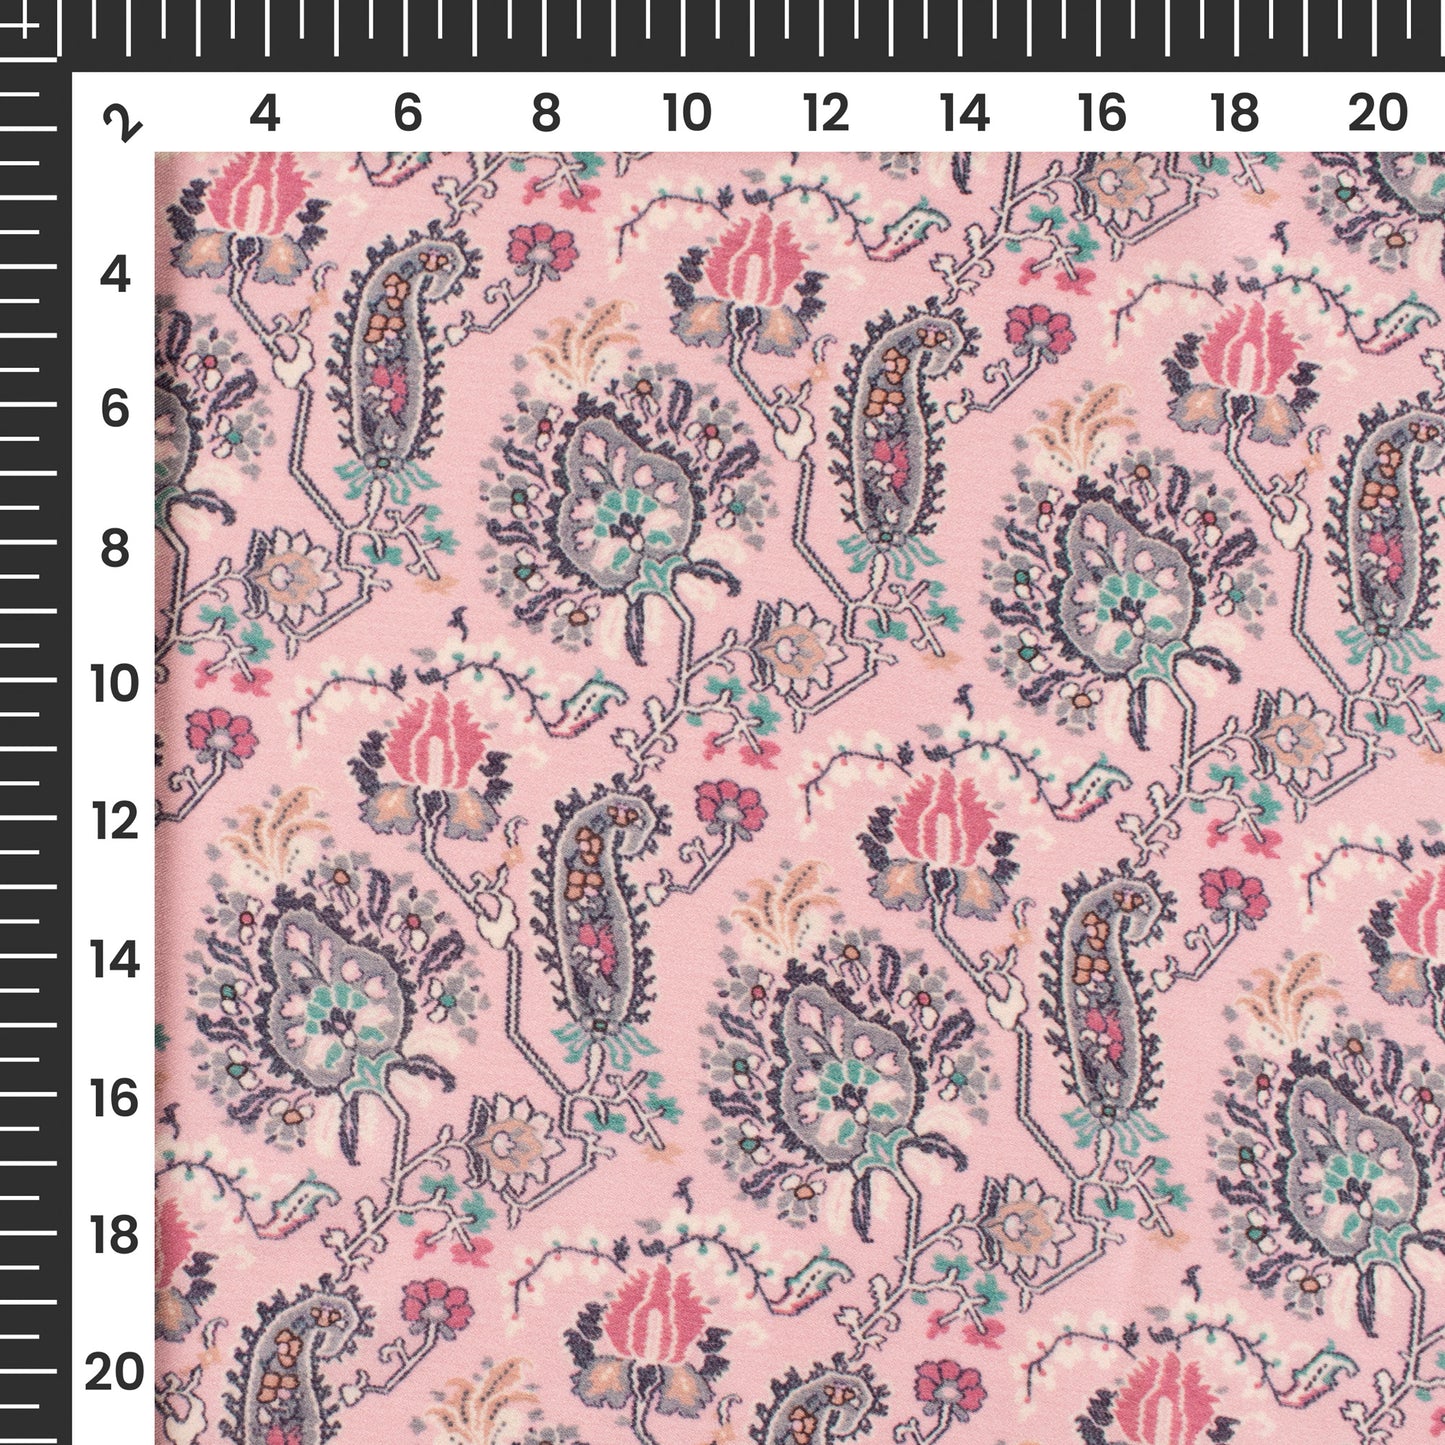 Pink Paisley Digital Print Chiffon Satin Fabric